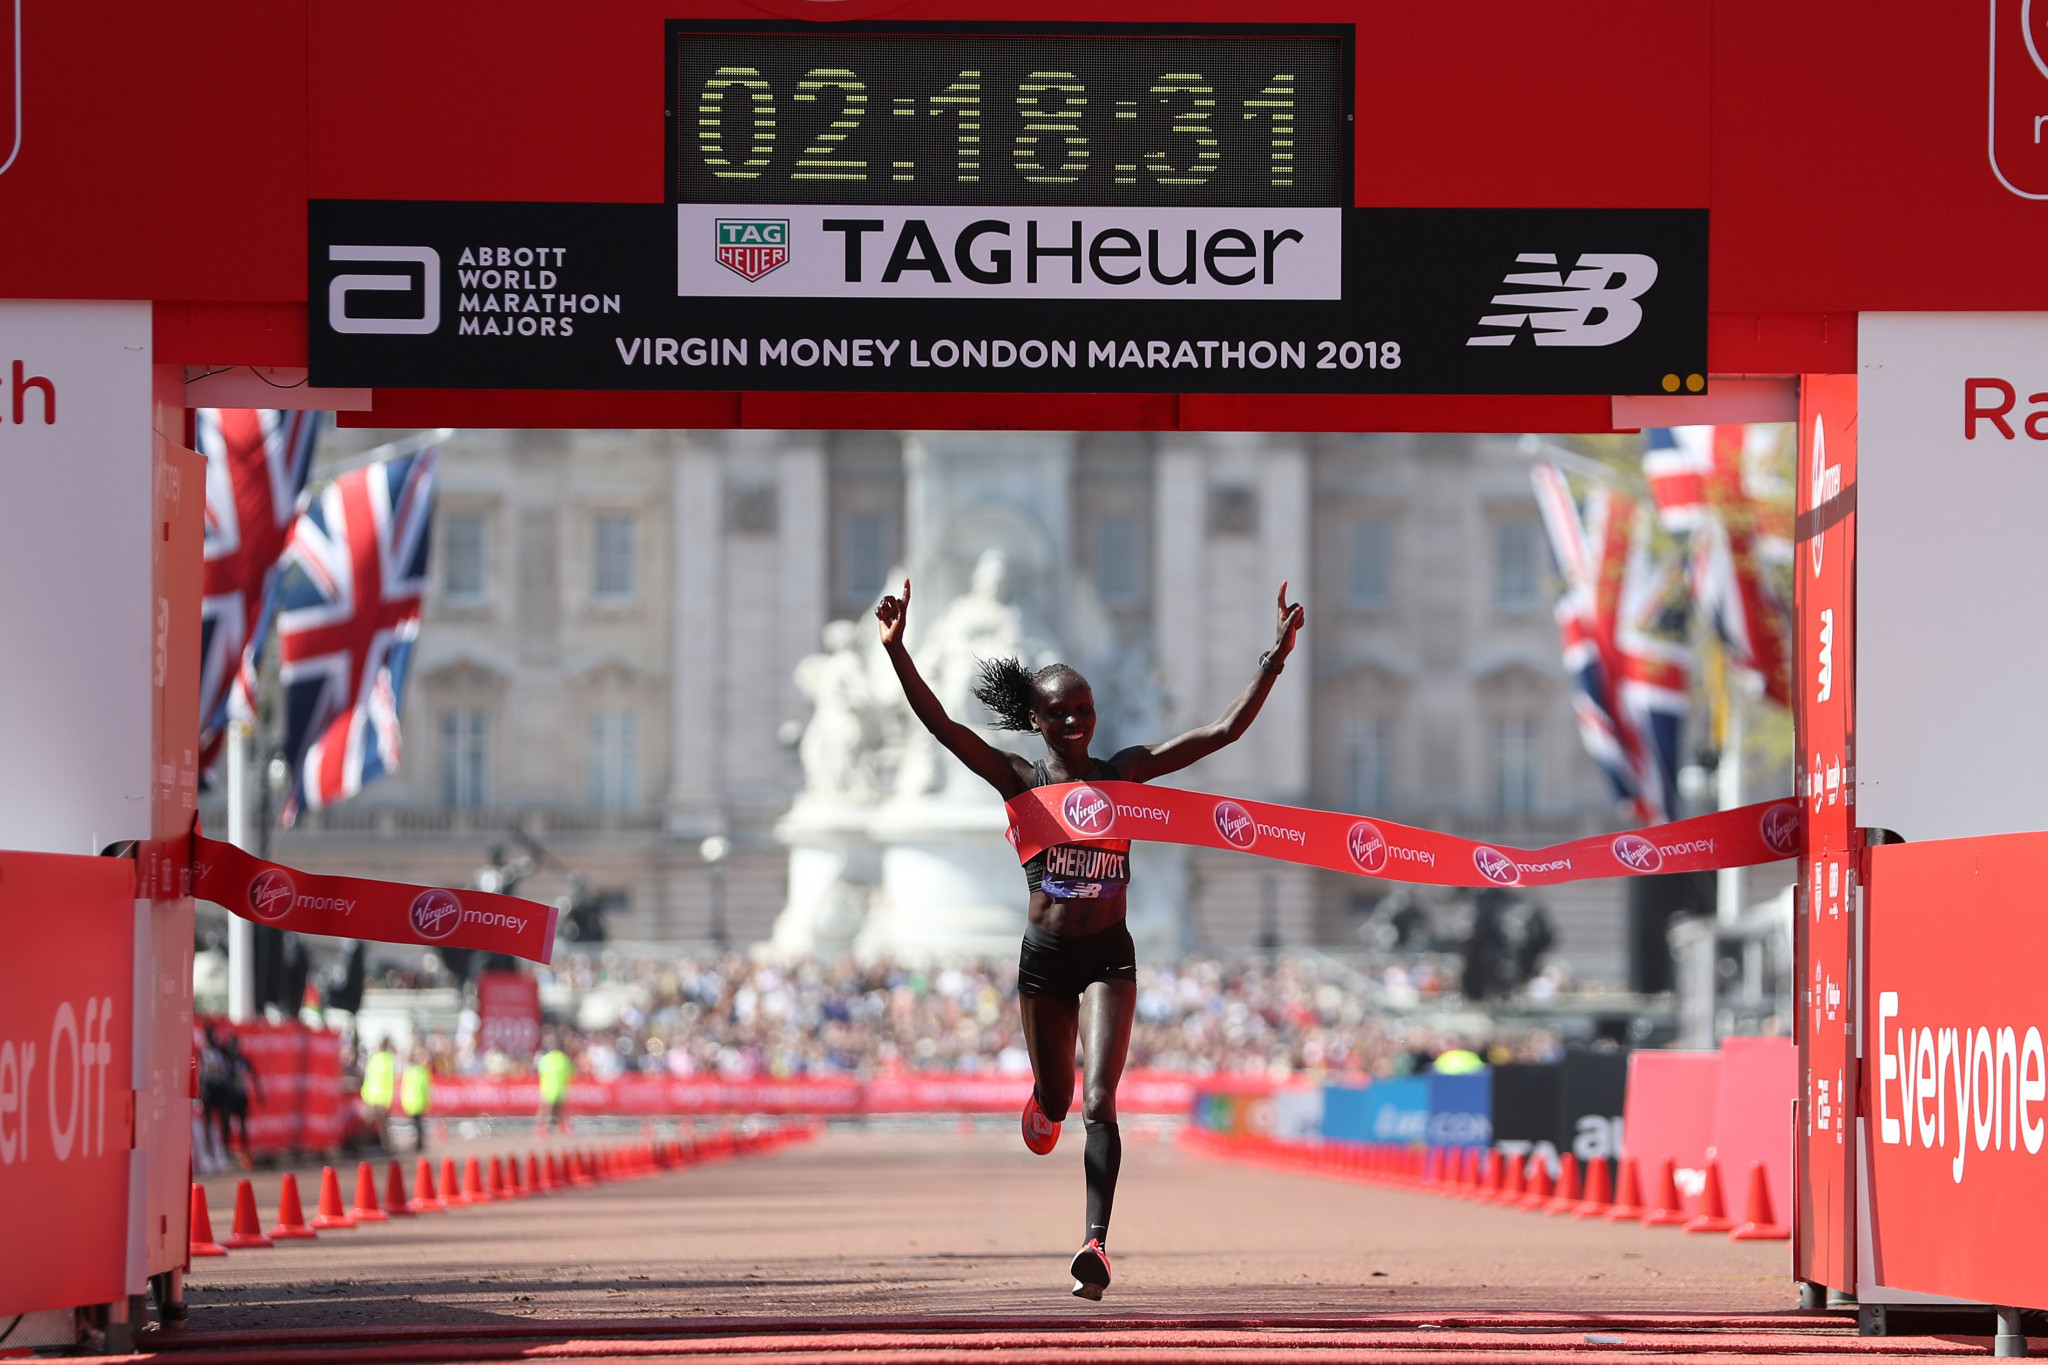 Kenya's Olympic 5,000 metres champion Vivian Cheruiyot won her first Virgin London Marathon ©Getty Images